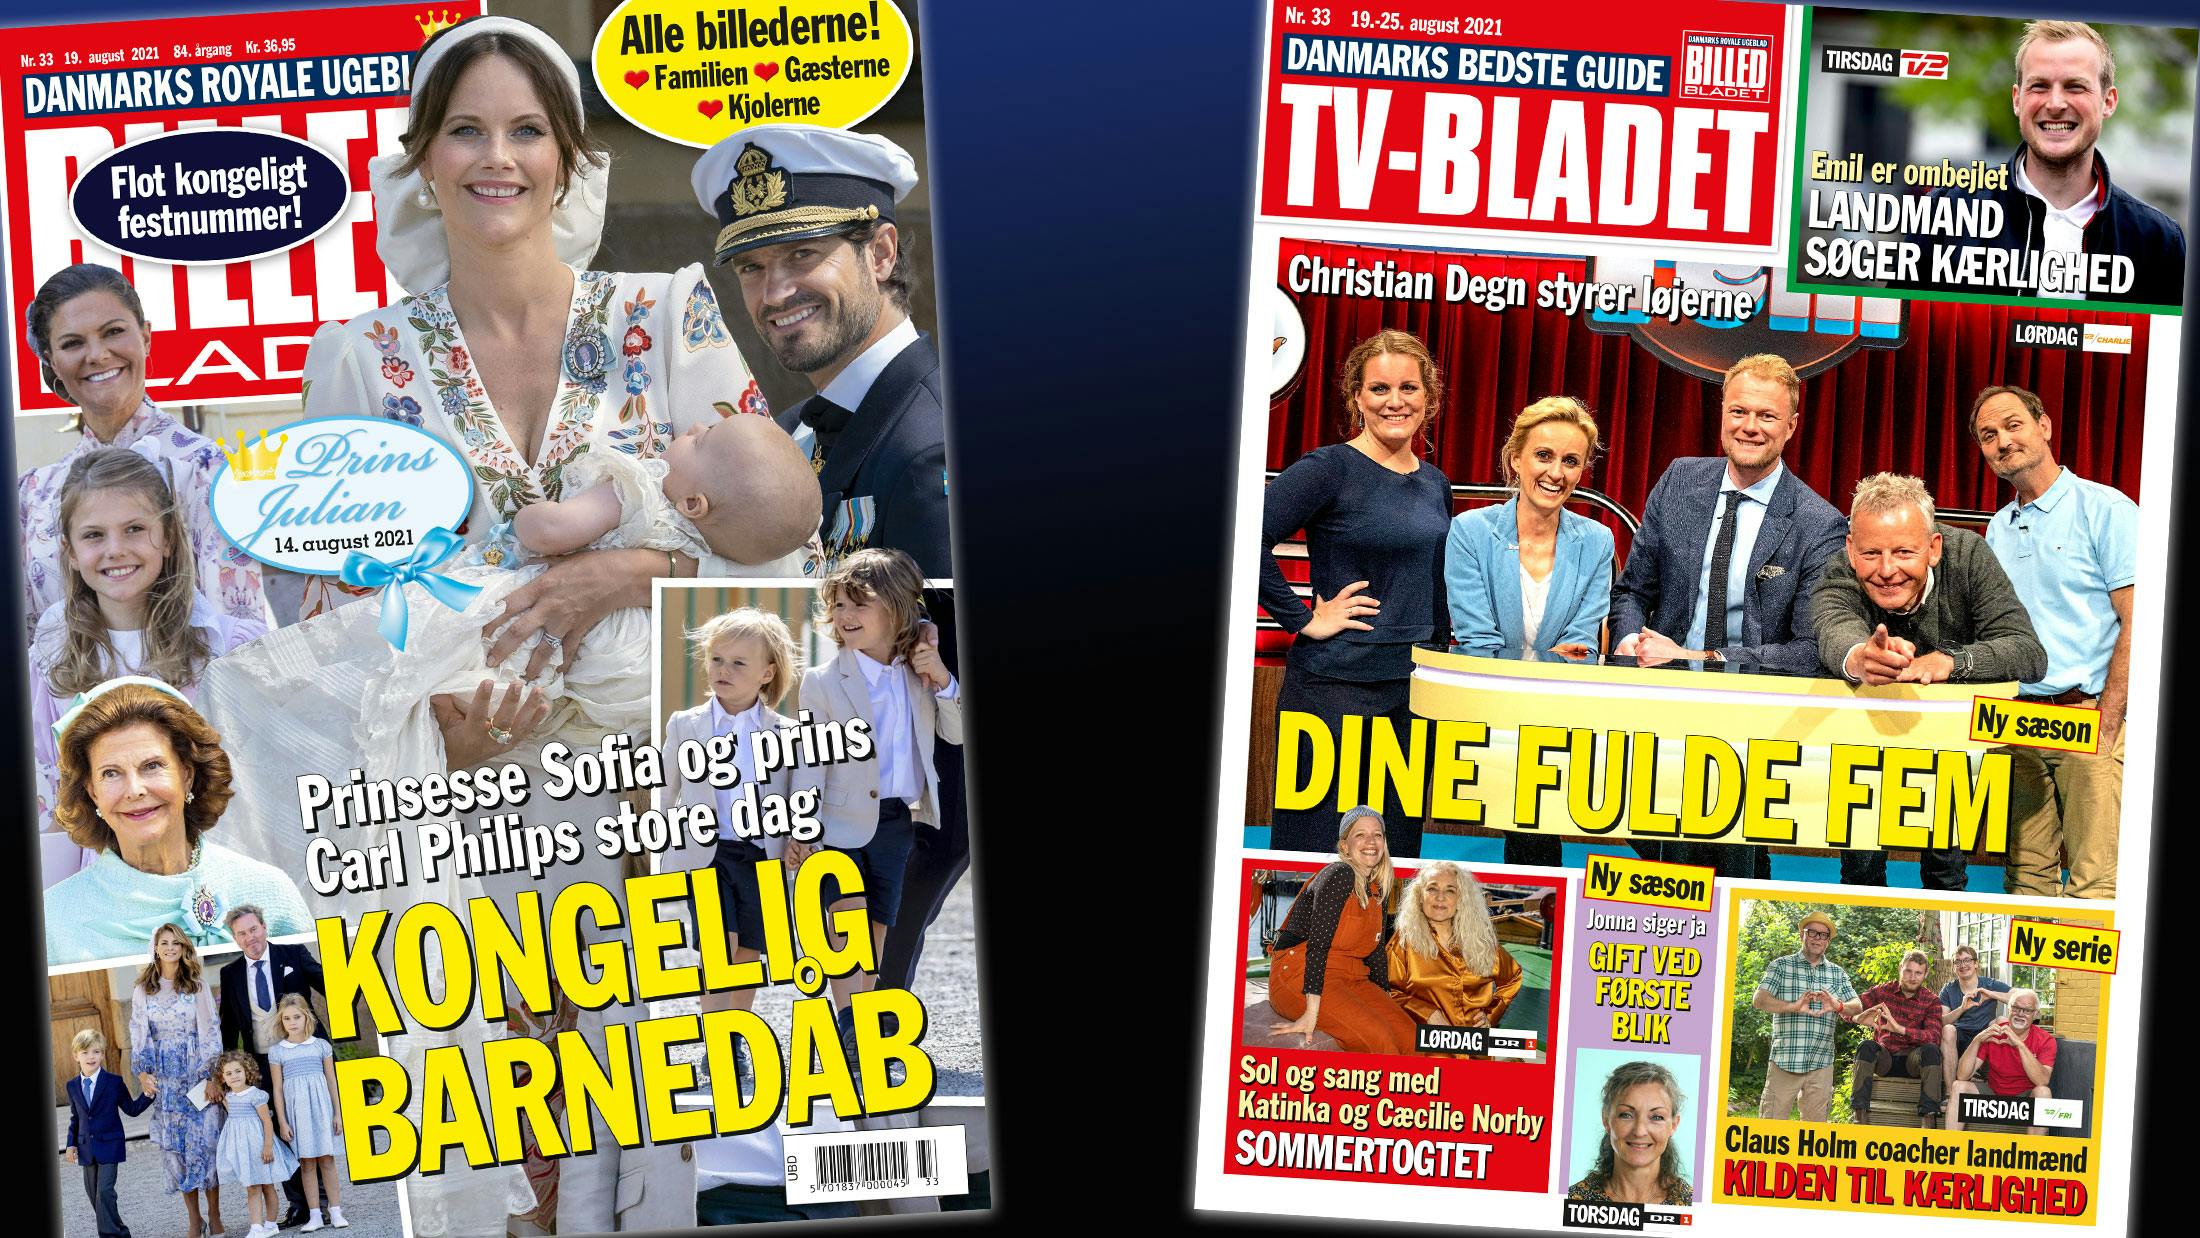 https://imgix.billedbladet.dk/webgrafik_bb33-forsider_1.jpg